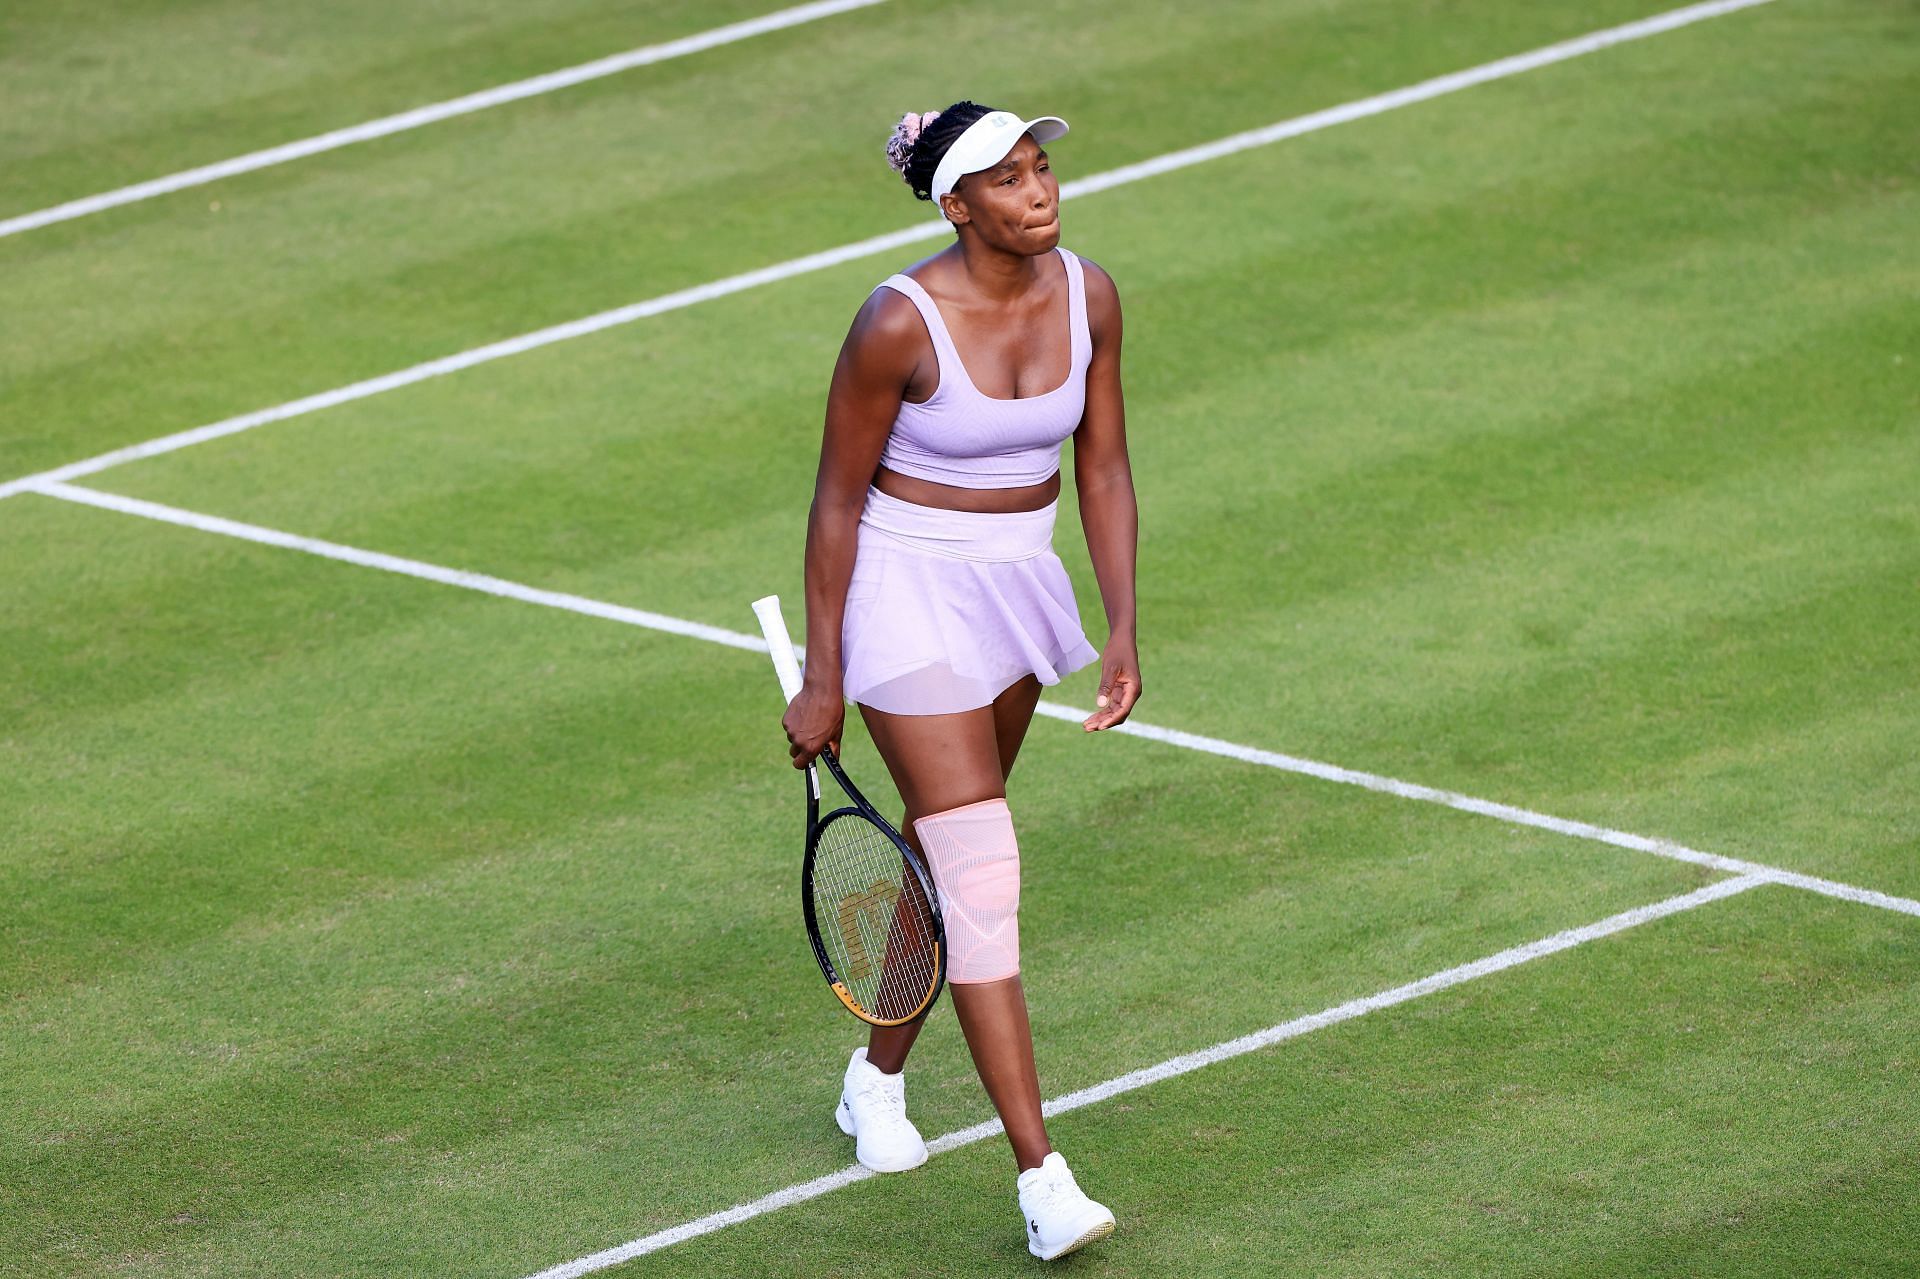 Venus Williams during her match against Camila Giorgi